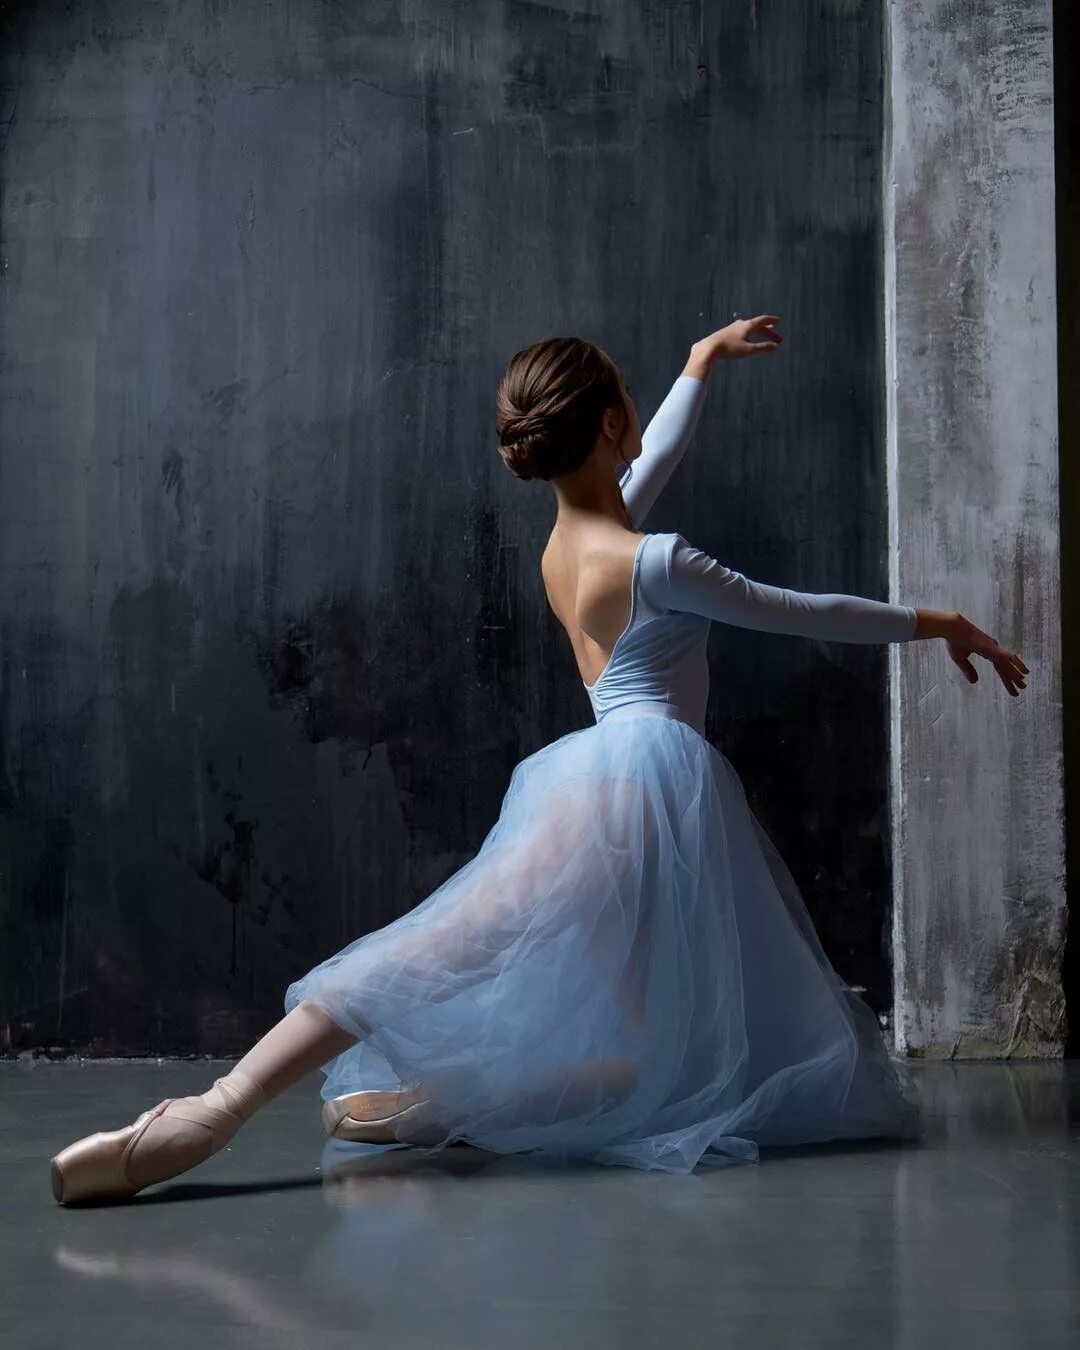 Балерина танцует. Серджио Манана. Натали Портман в пуантах. Балерина. Балерина Эстетика.